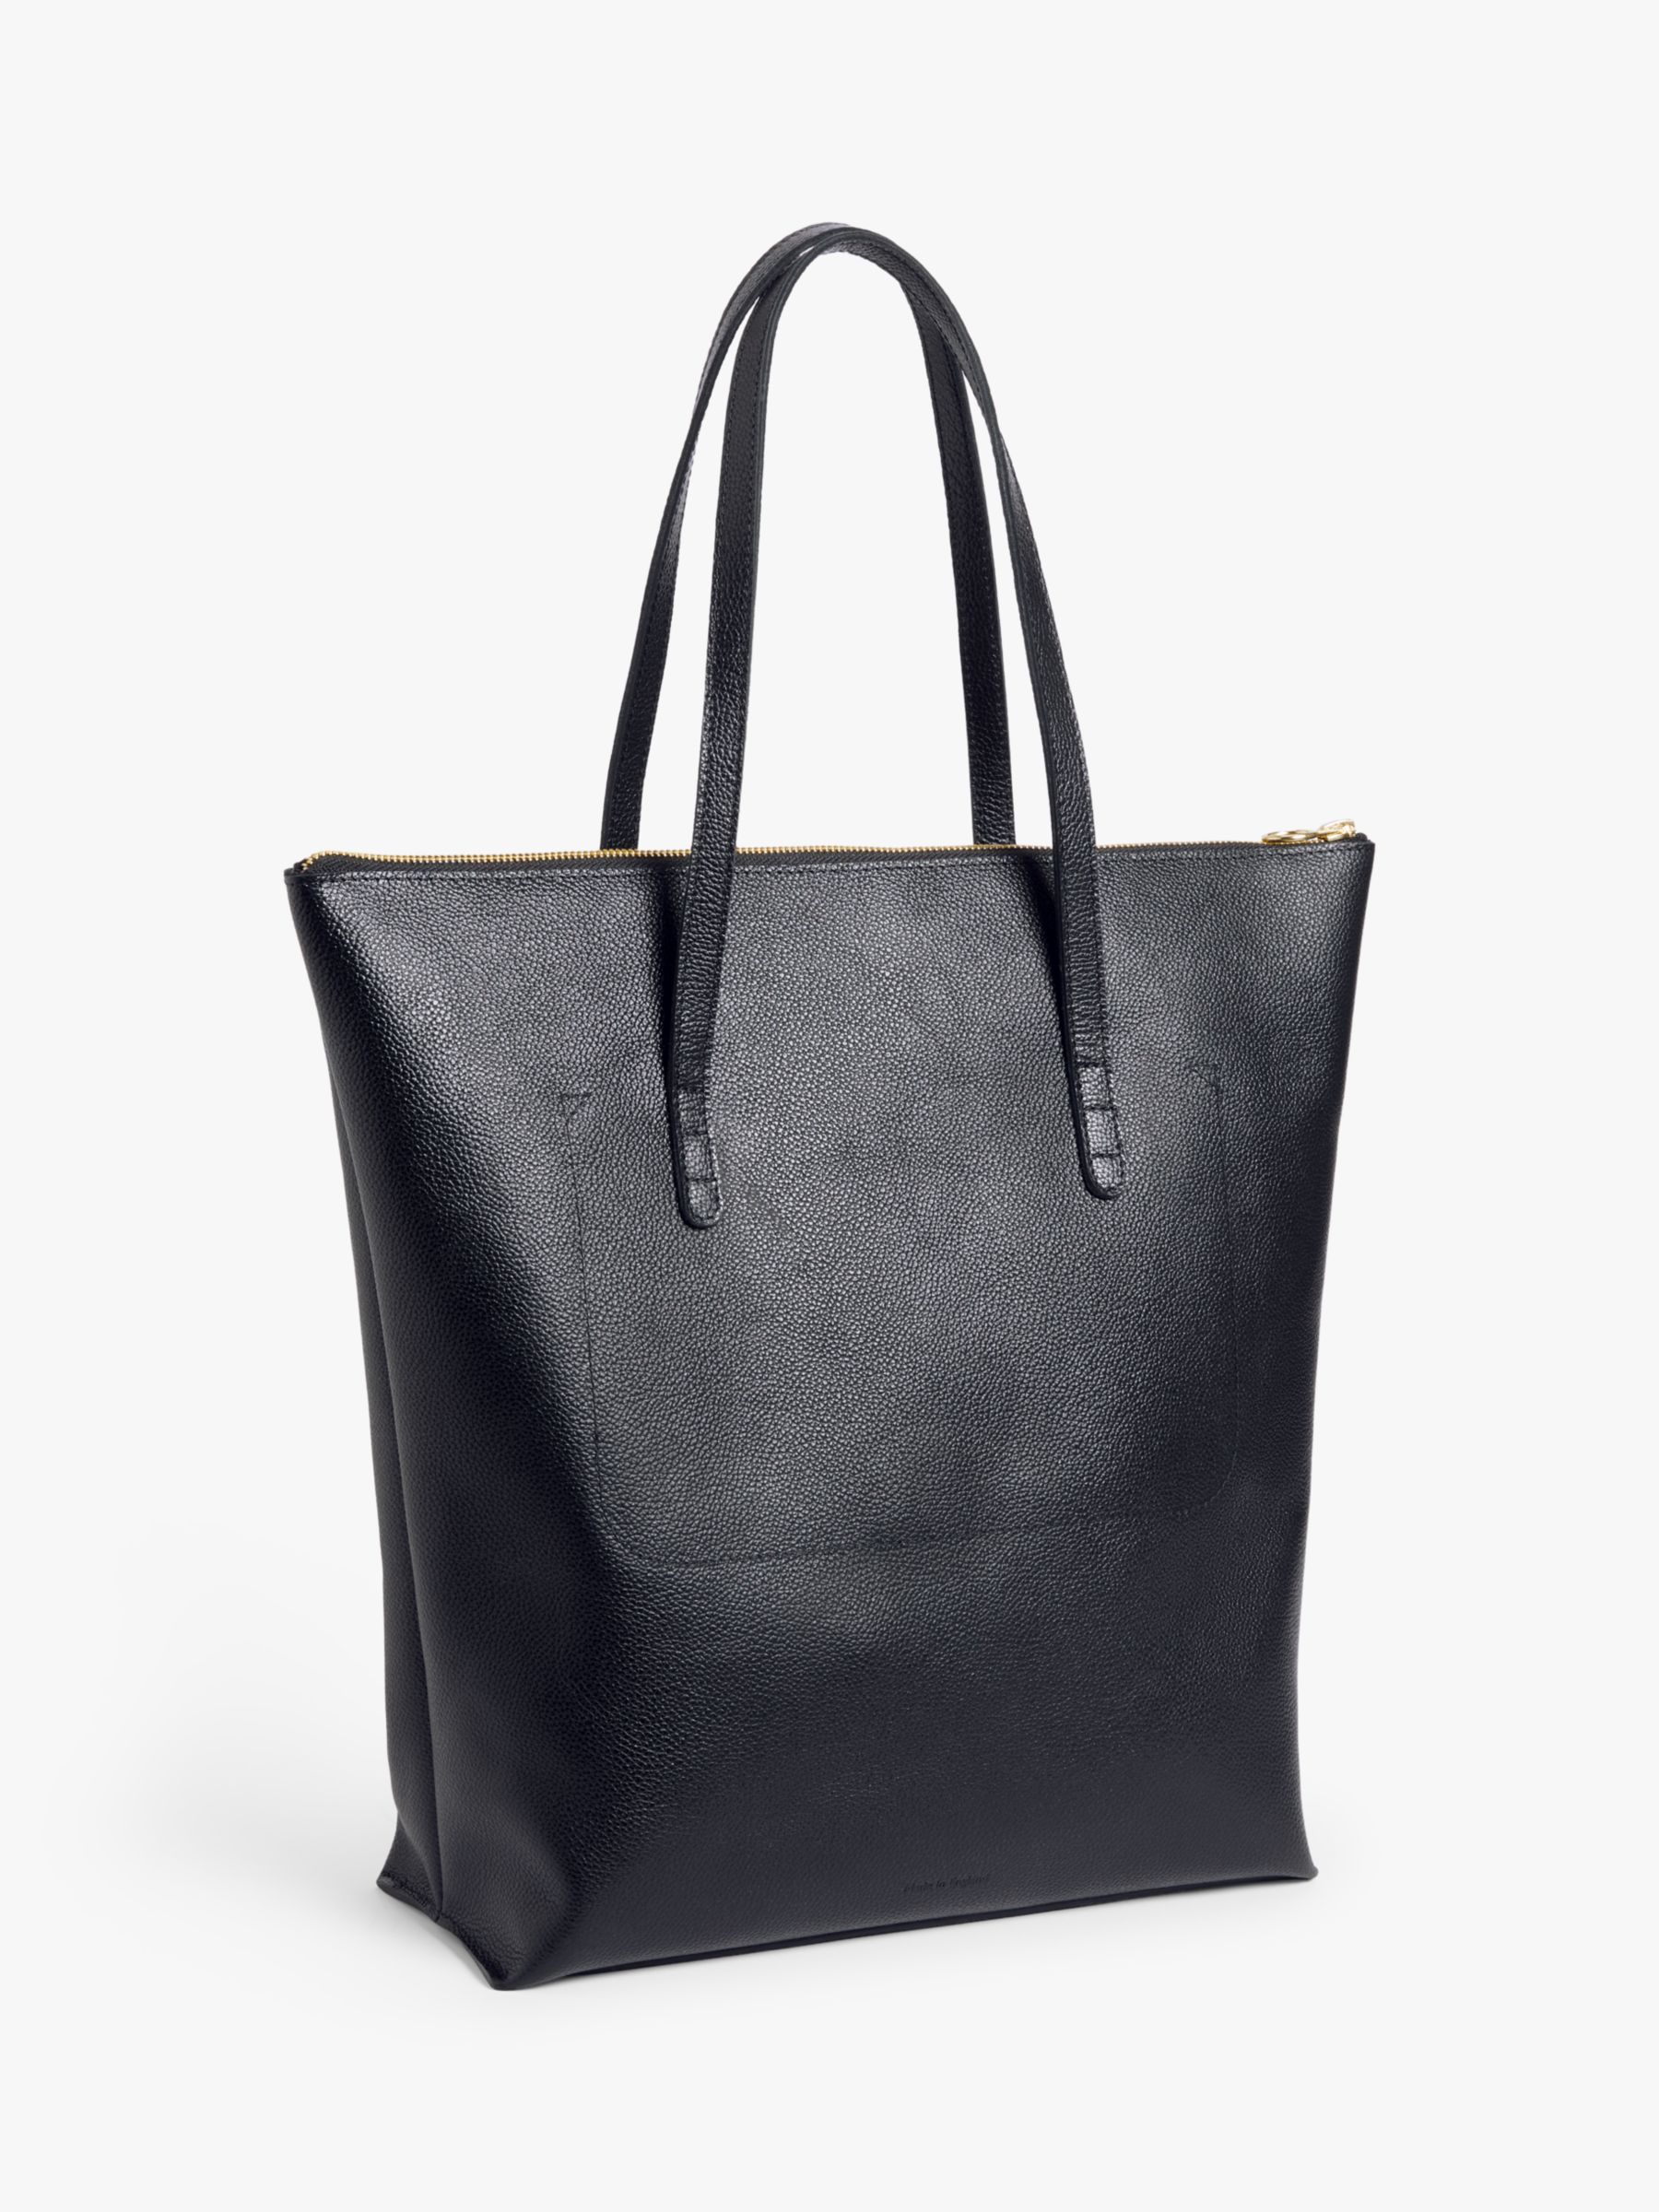 Honey & Toast Gracie Leather Tote Bag, Black at John Lewis & Partners